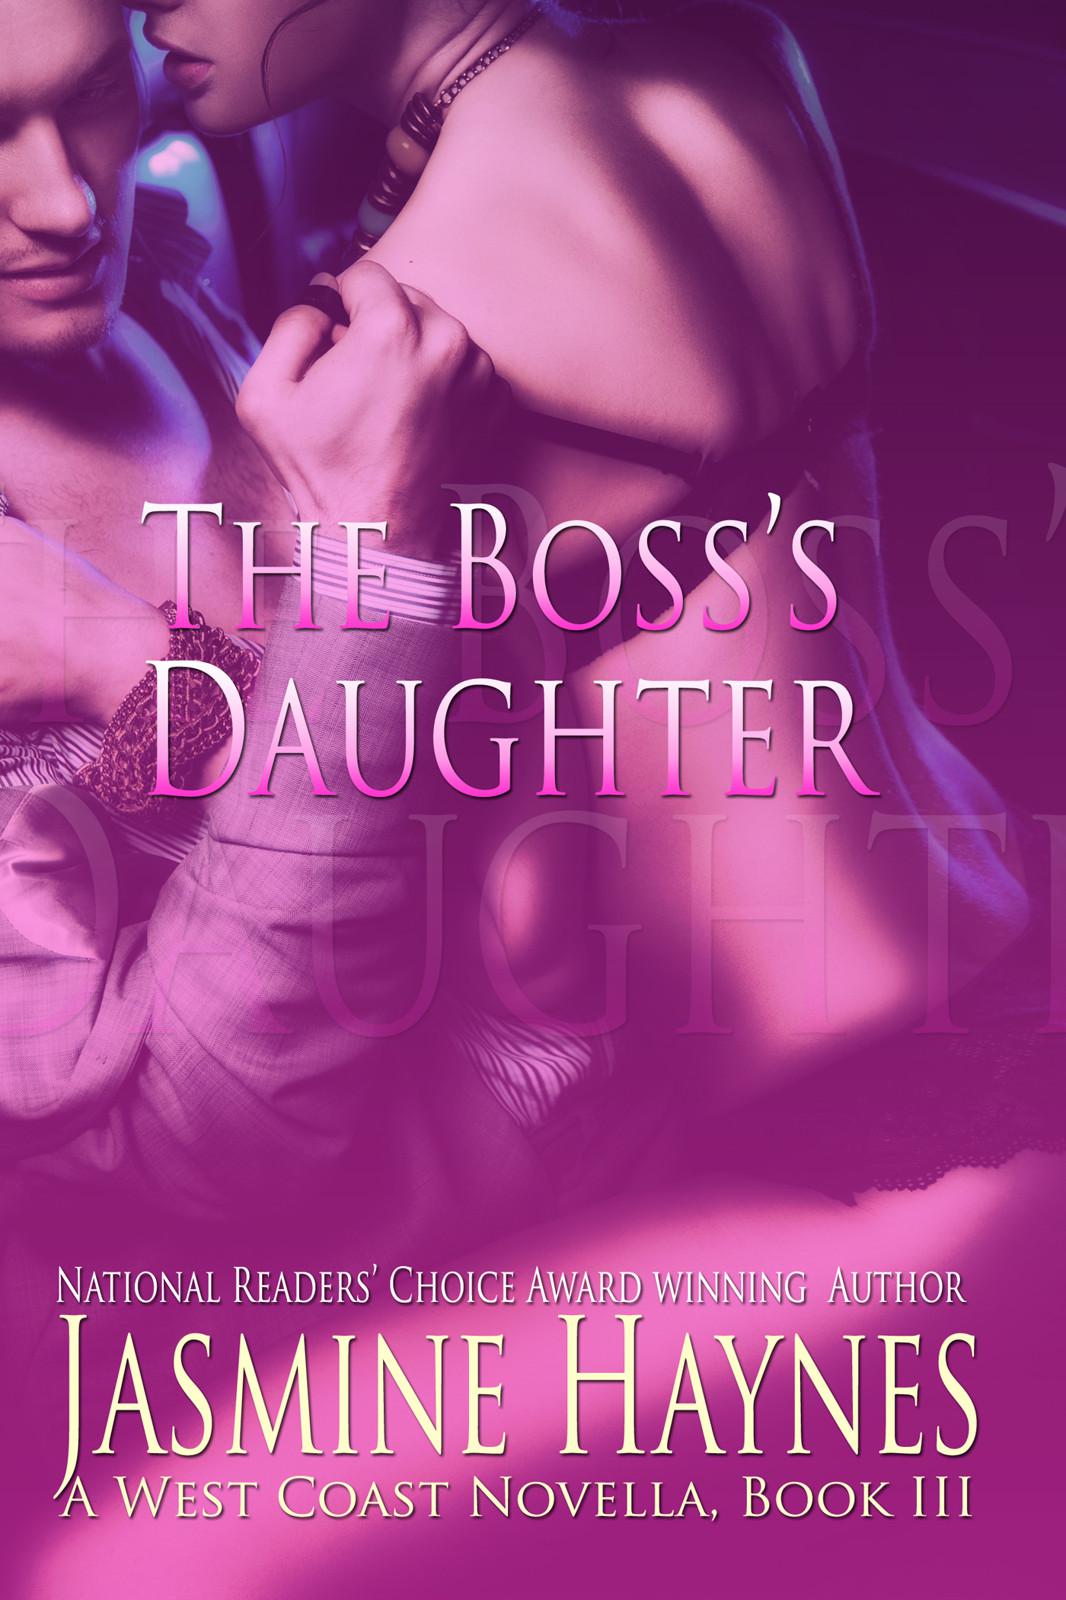 The Boss's Daughter by Jasmine Haynes